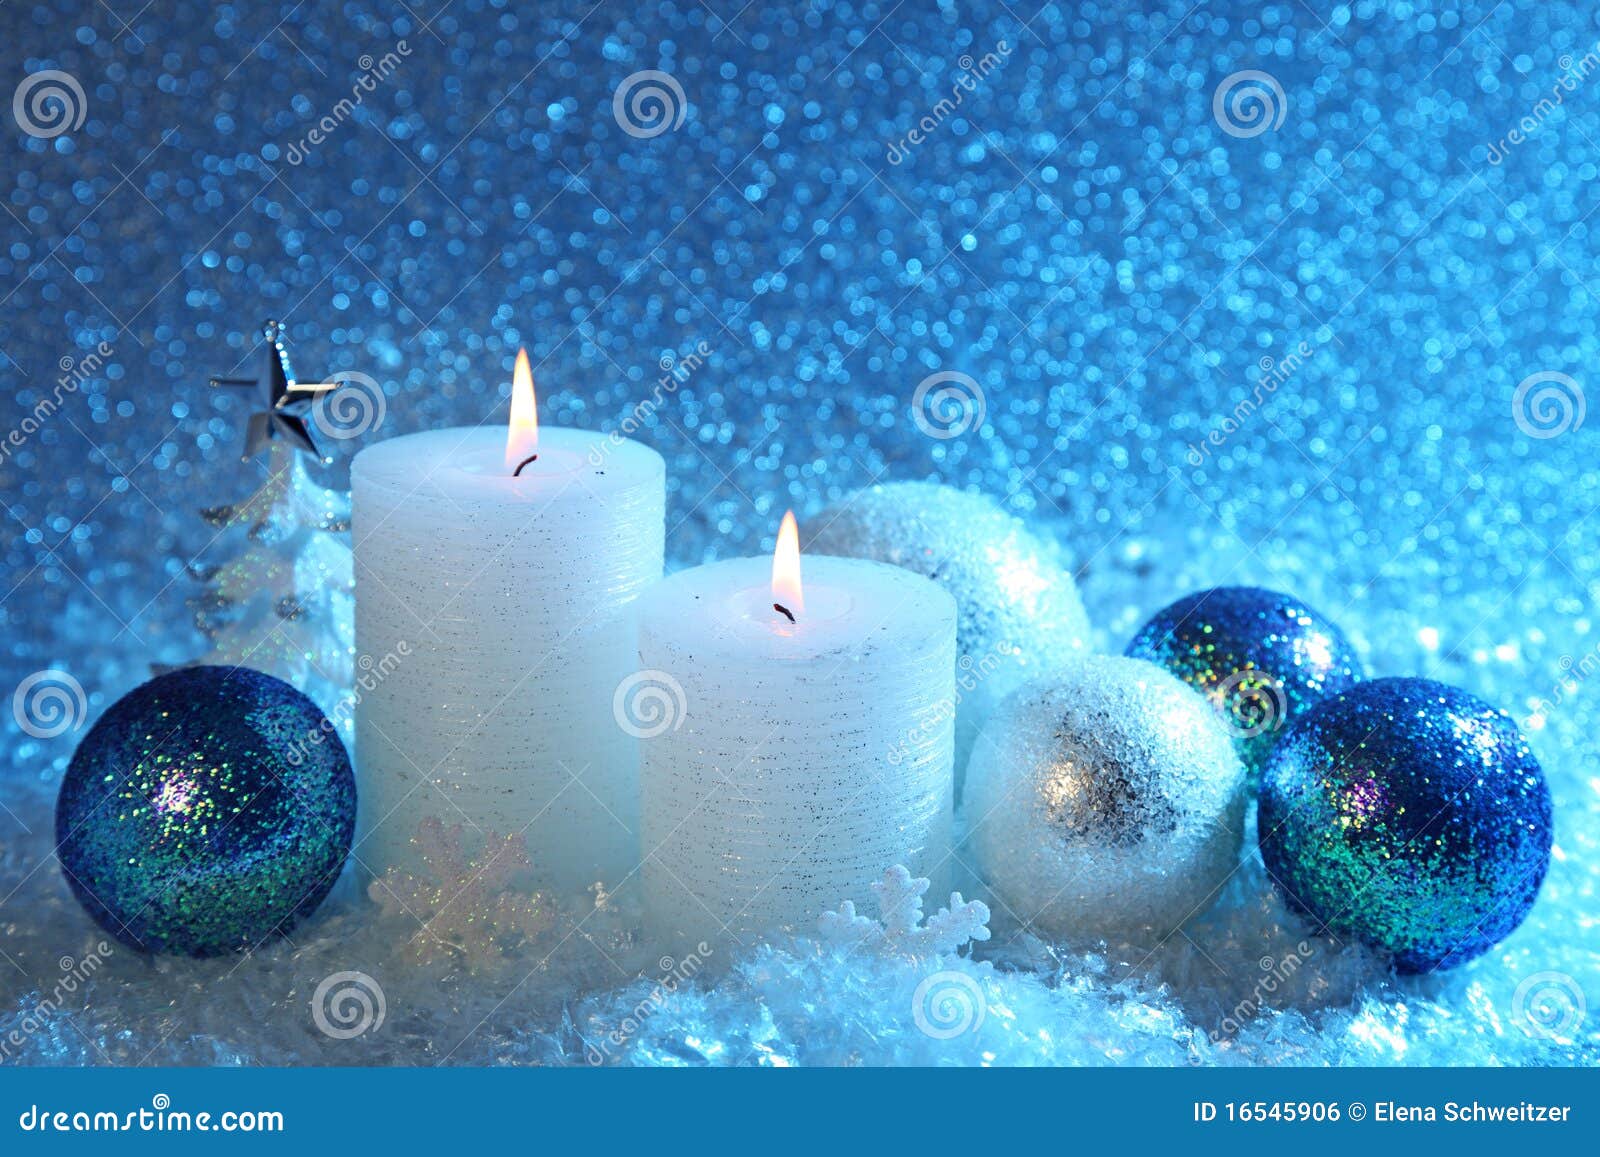 White And Blue Christmas Decoration Royalty Free Stock Image - Image ...